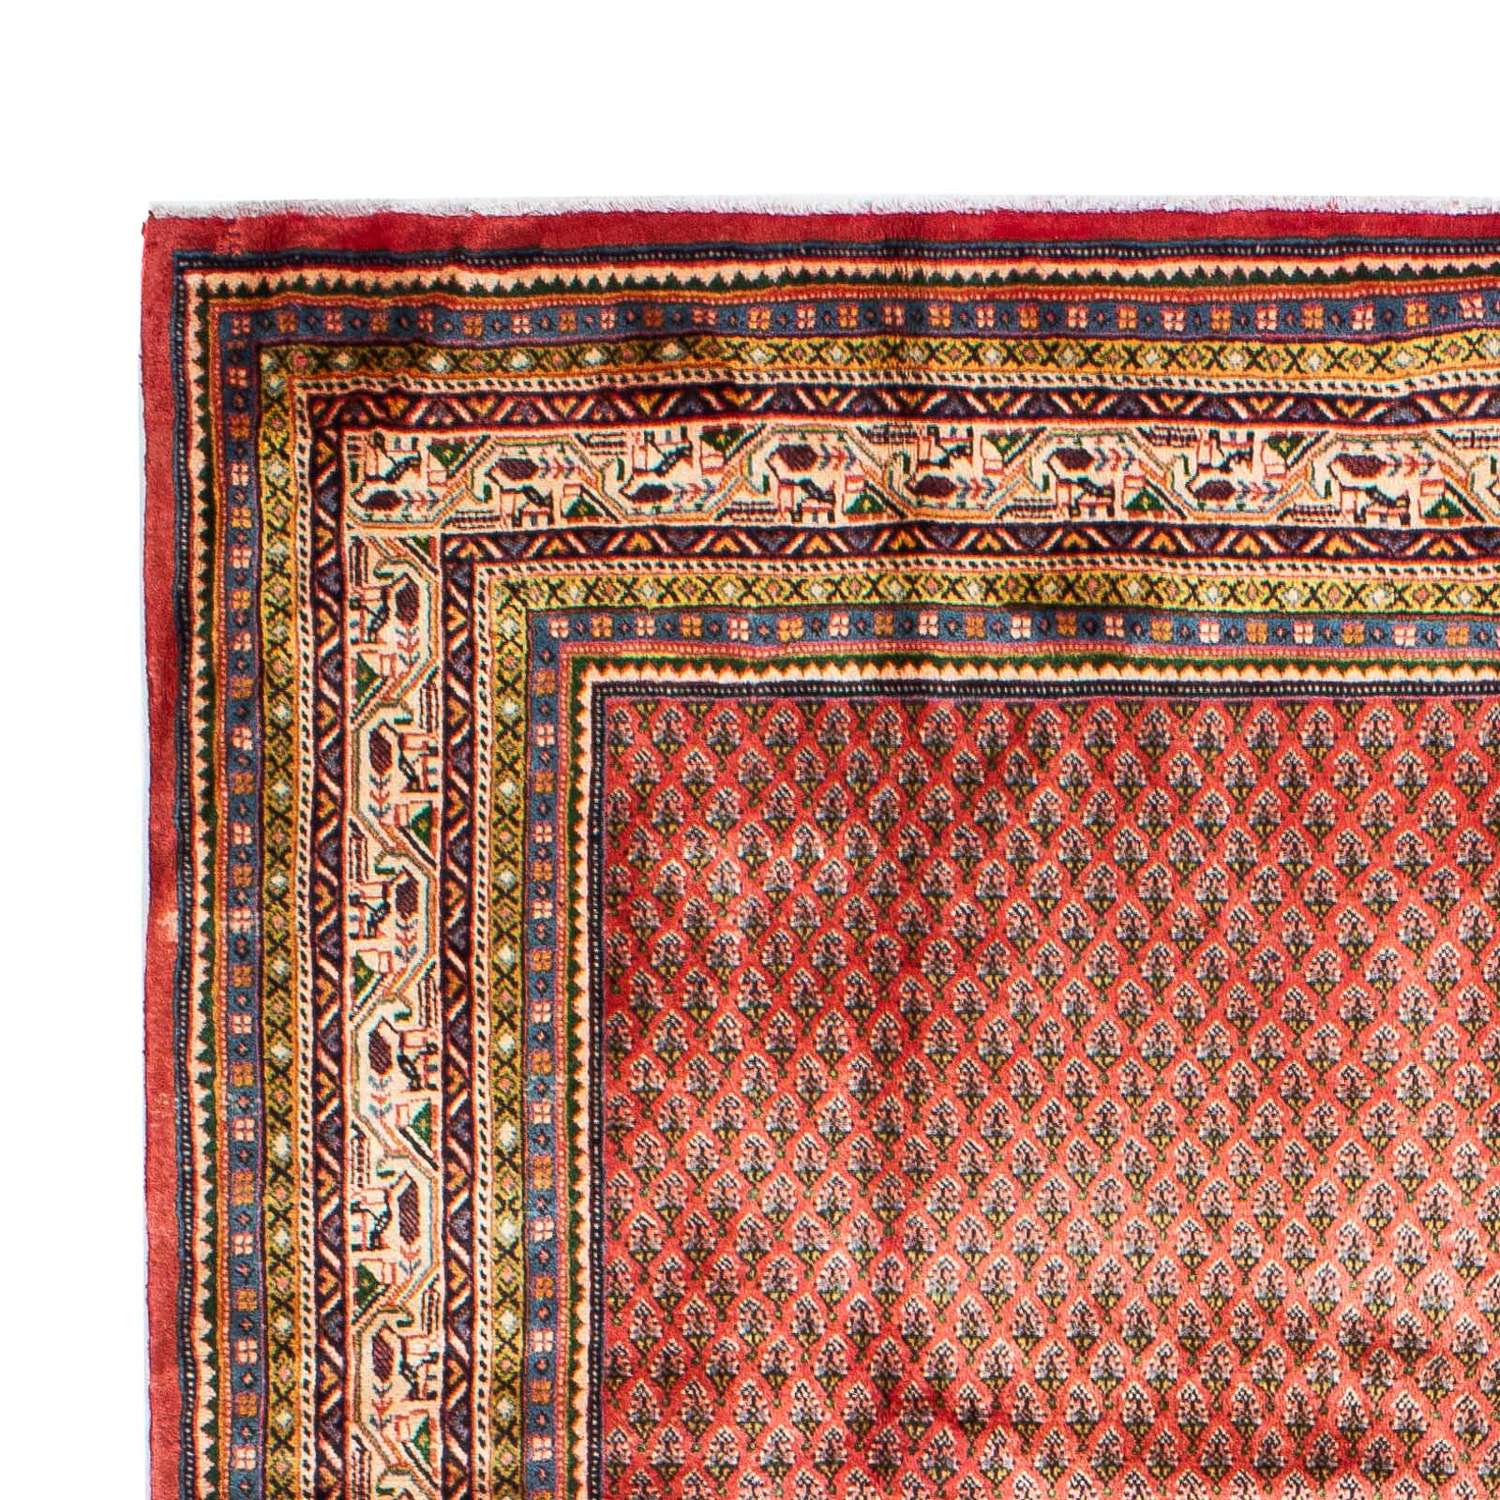 Tapis persan - Mir - 310 x 215 cm - rouge foncé